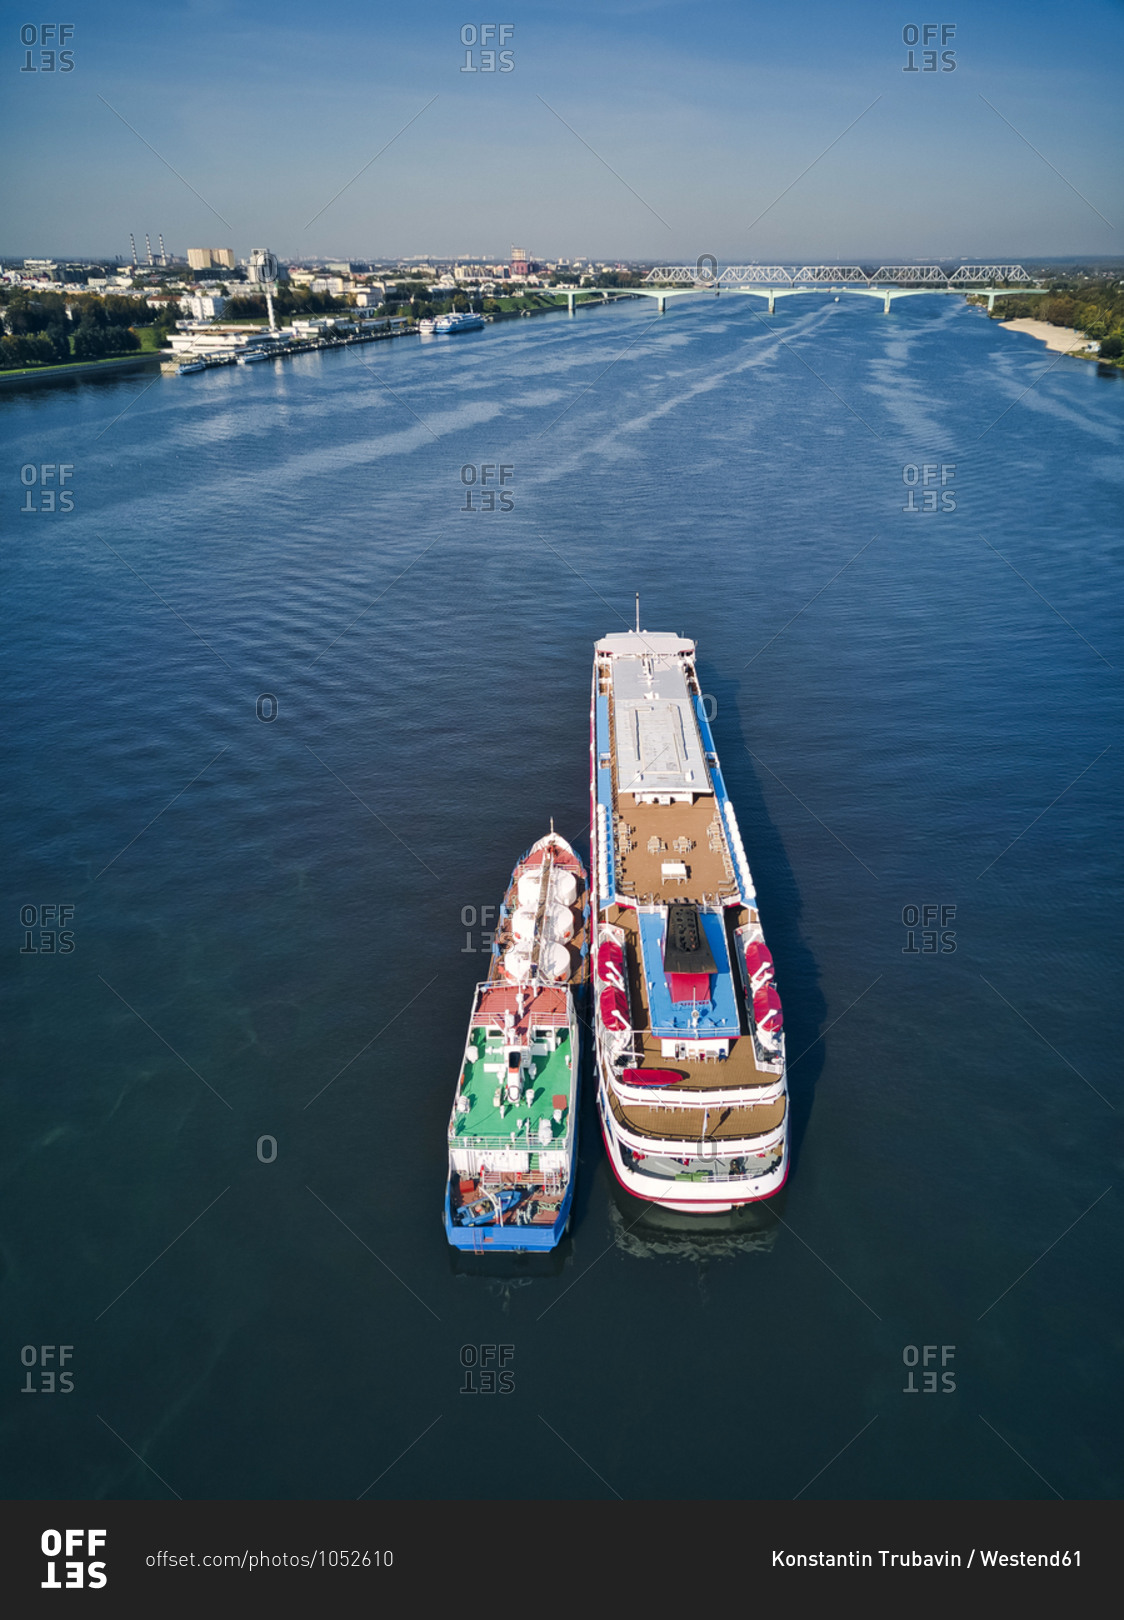 Barge refueling recreational boat on Volga River against sky